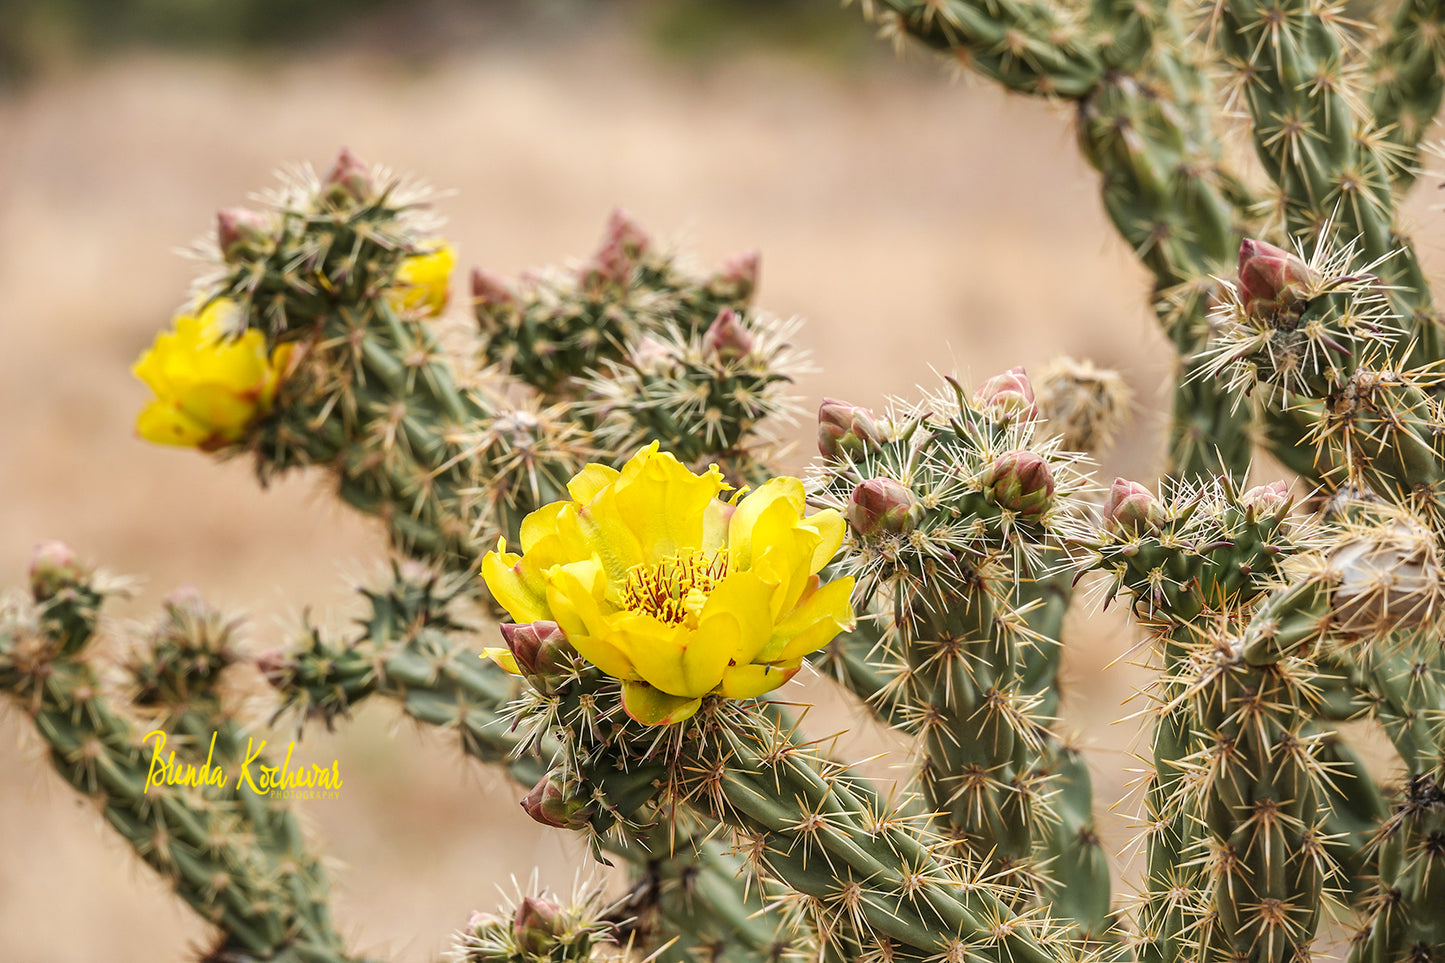 Yellow Cactus Bloom Greeting Card